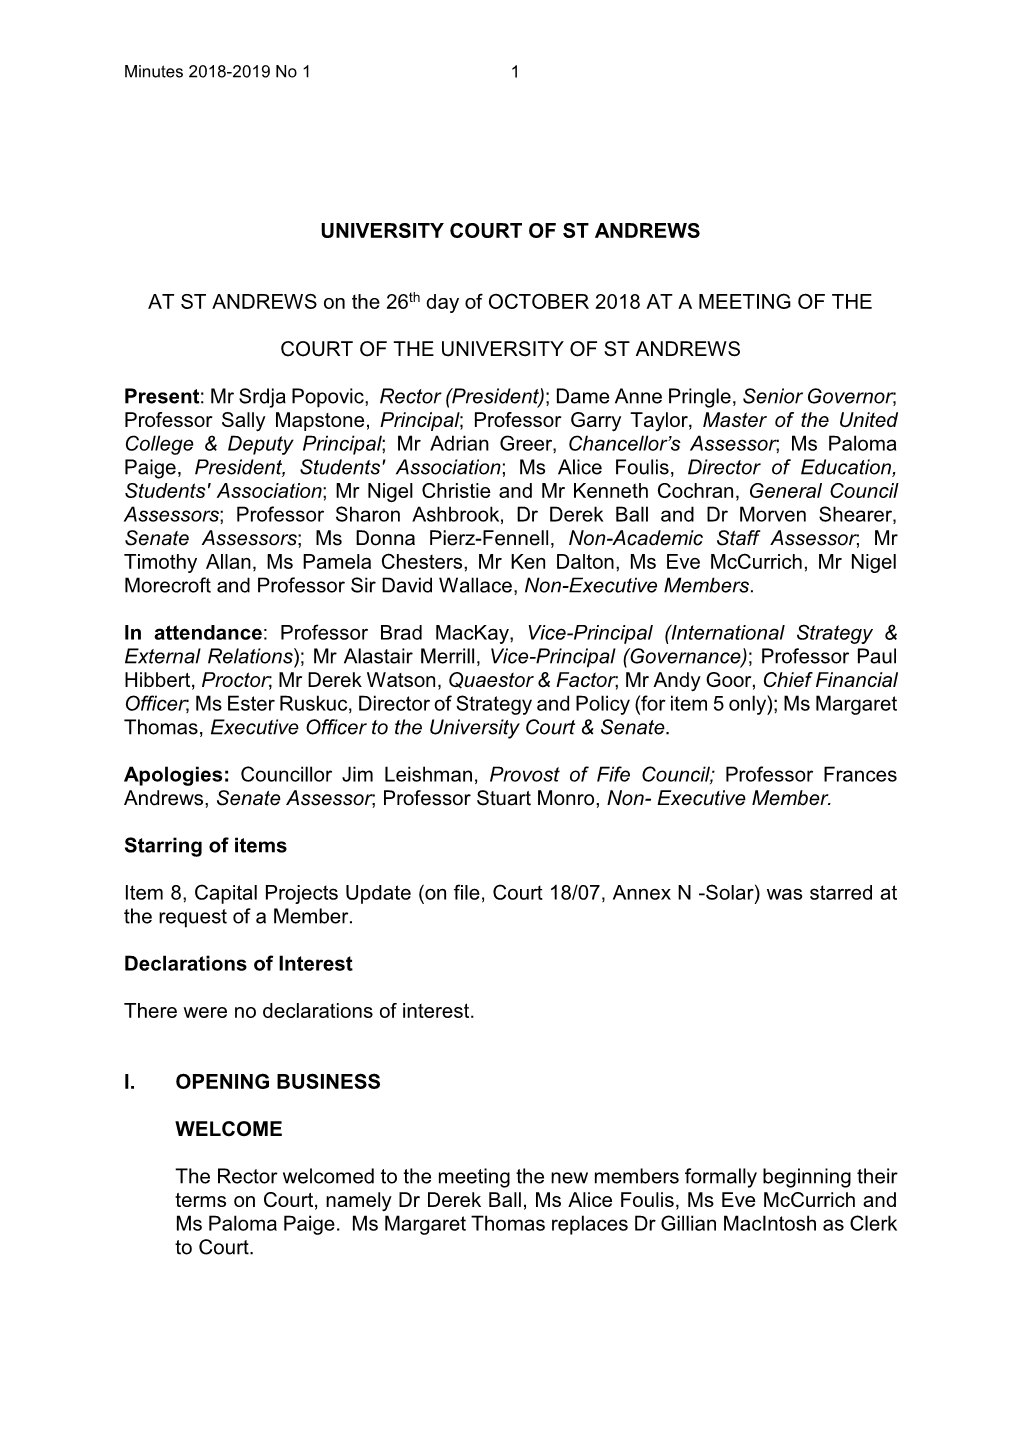 UNIVERSITY COURT of ST ANDREWS at ST ANDREWS On